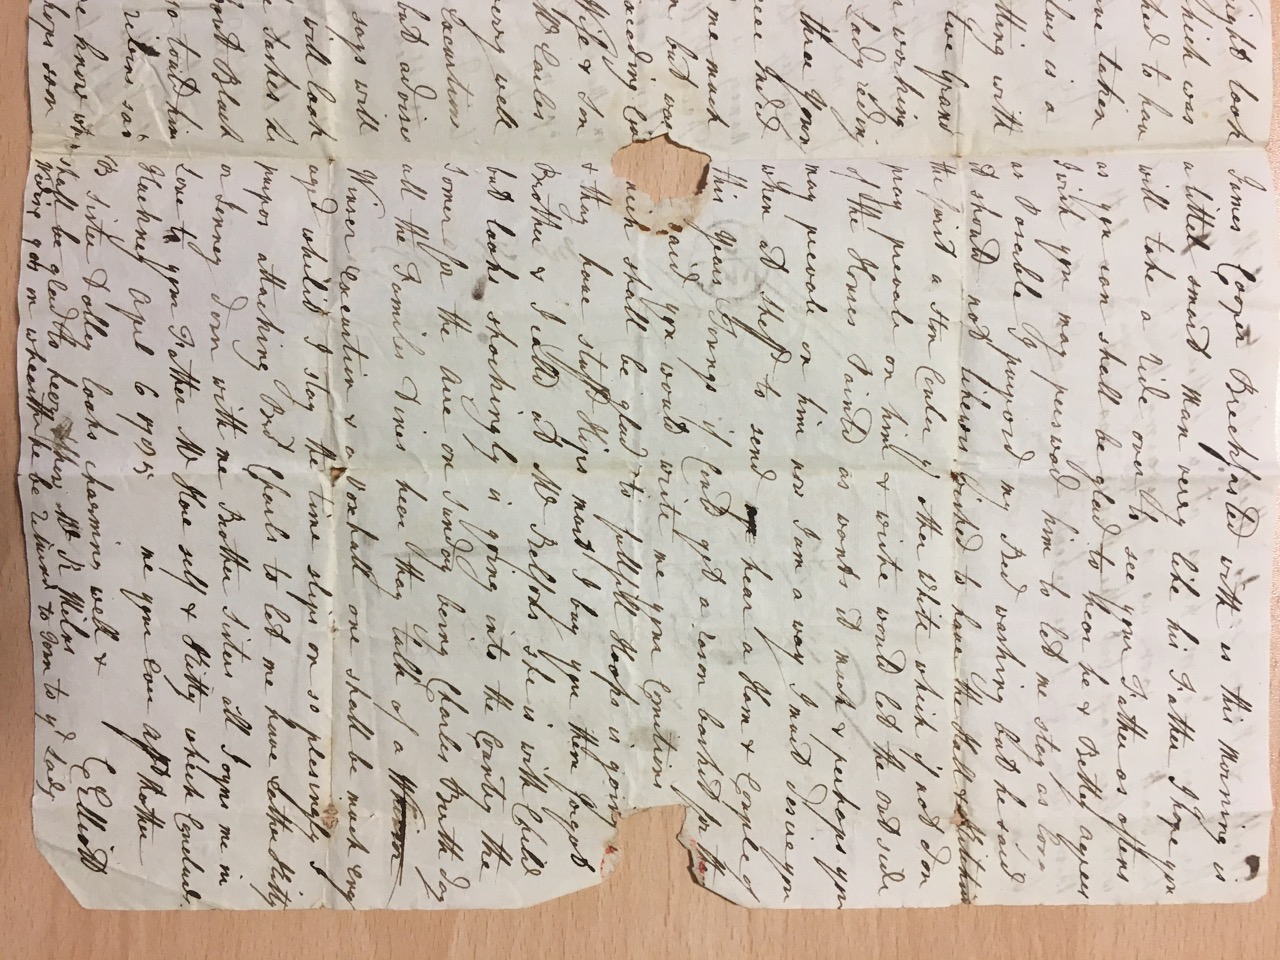 Image #3 of letter: Catherine Elliott to Ann Hare, 6 April 1785